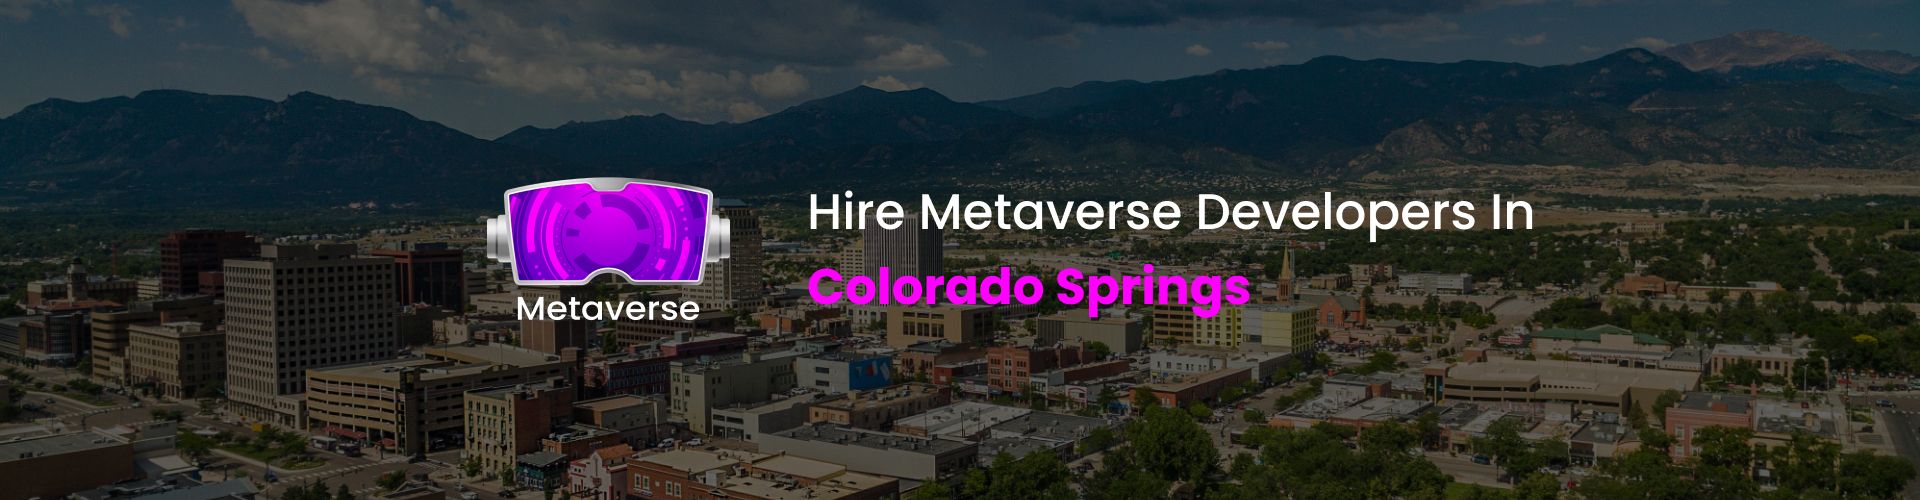 metaverse developers in colorado springs